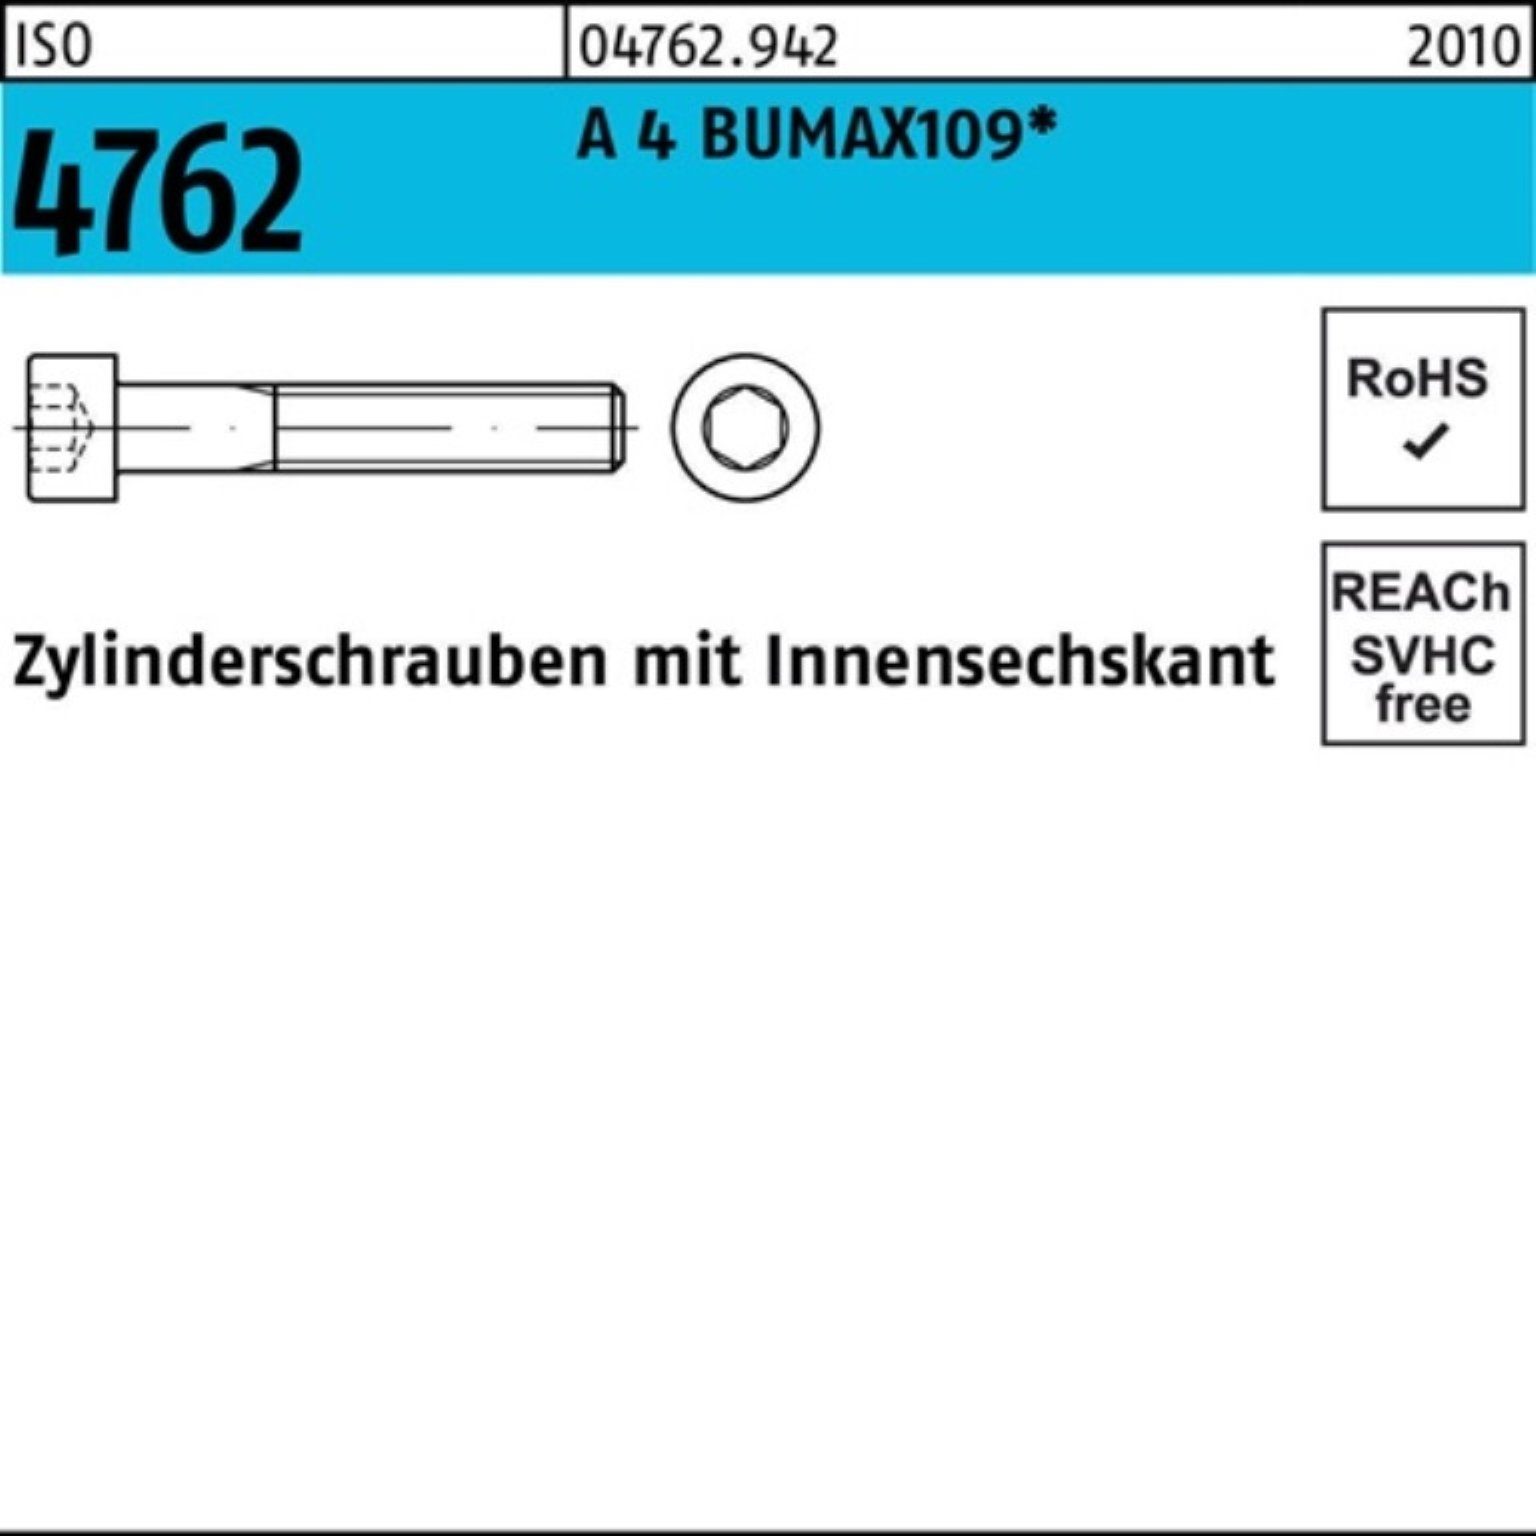 Bufab Zylinderschraube 100er Pack Zylinderschraube ISO 4762 Innen-6kt M12x 70 A 4 BUMAX109 25